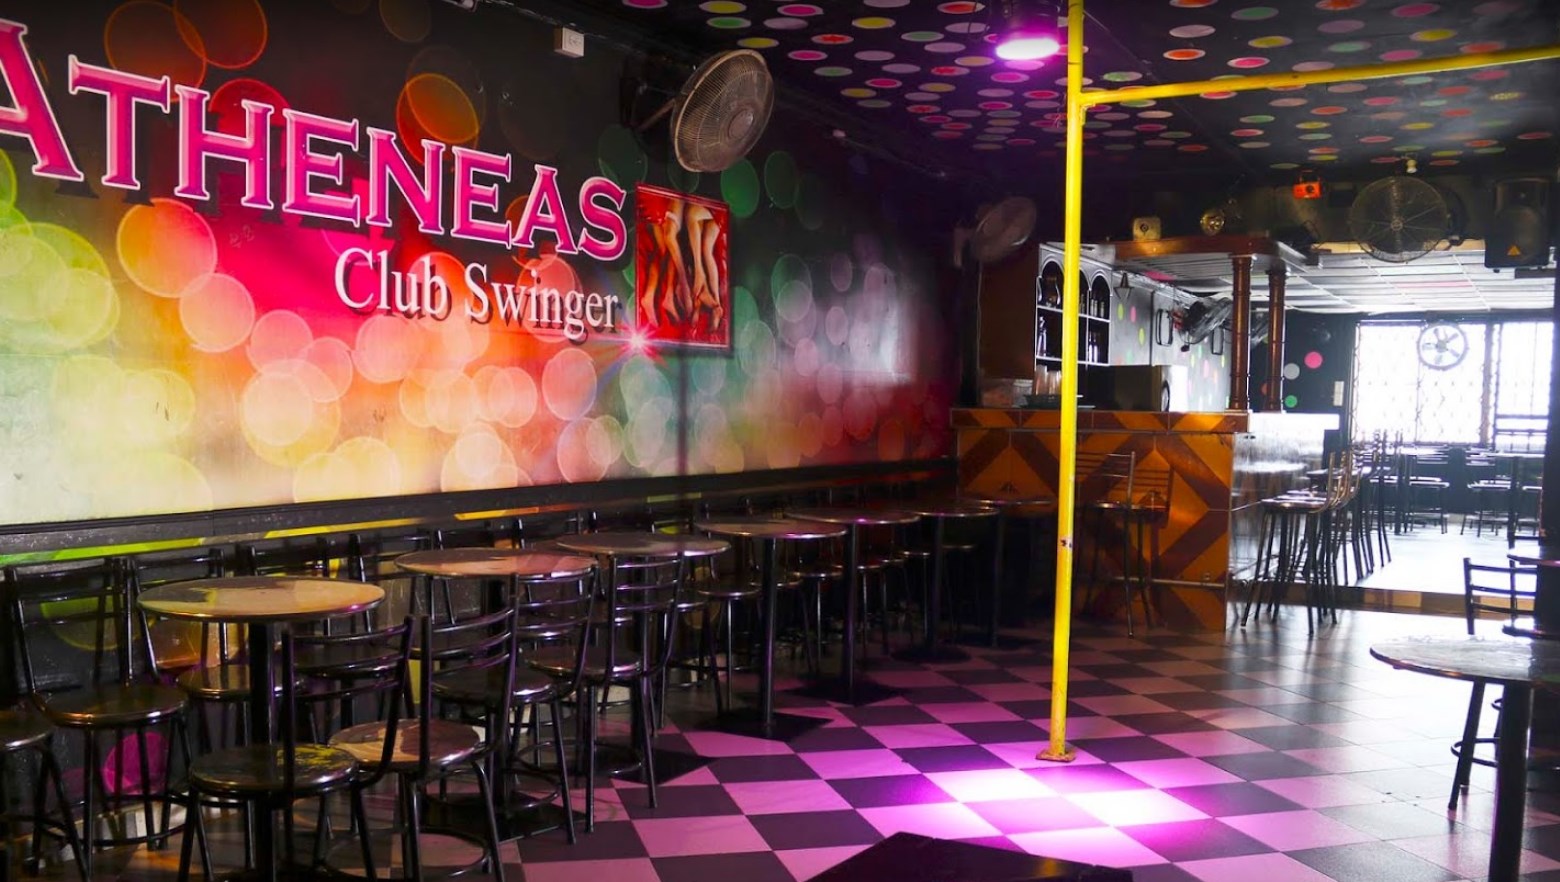 Atheneas Club Club Swinger, Cali and 5+ image